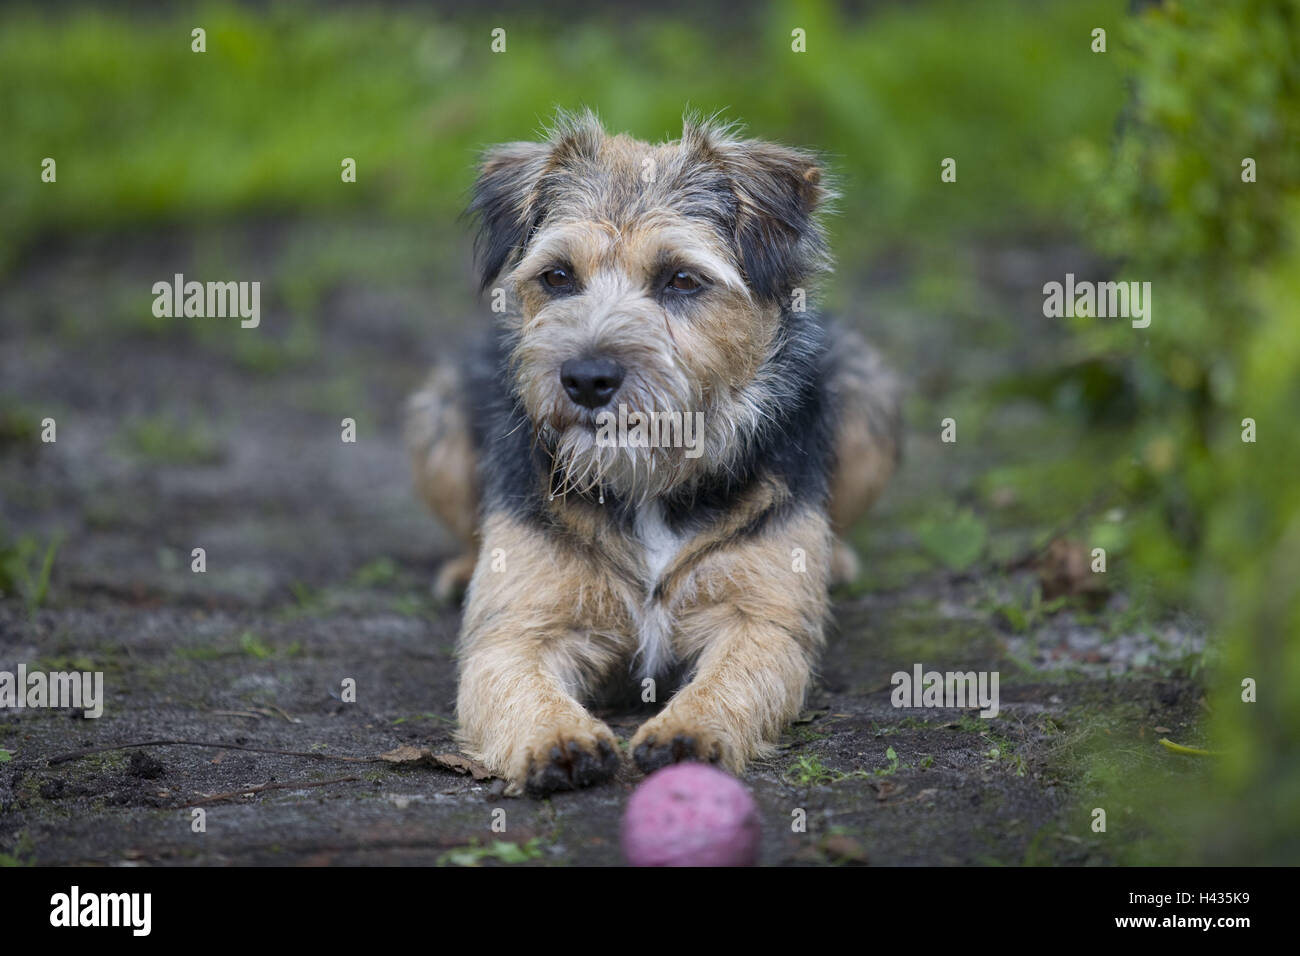 Garden, hybrid dog, ground, lying, ball, animal, mammal, pet, pet dog, dog, hybrid, border terrier, Parson terrier, toy, waiting, outdoors, Stock Photo